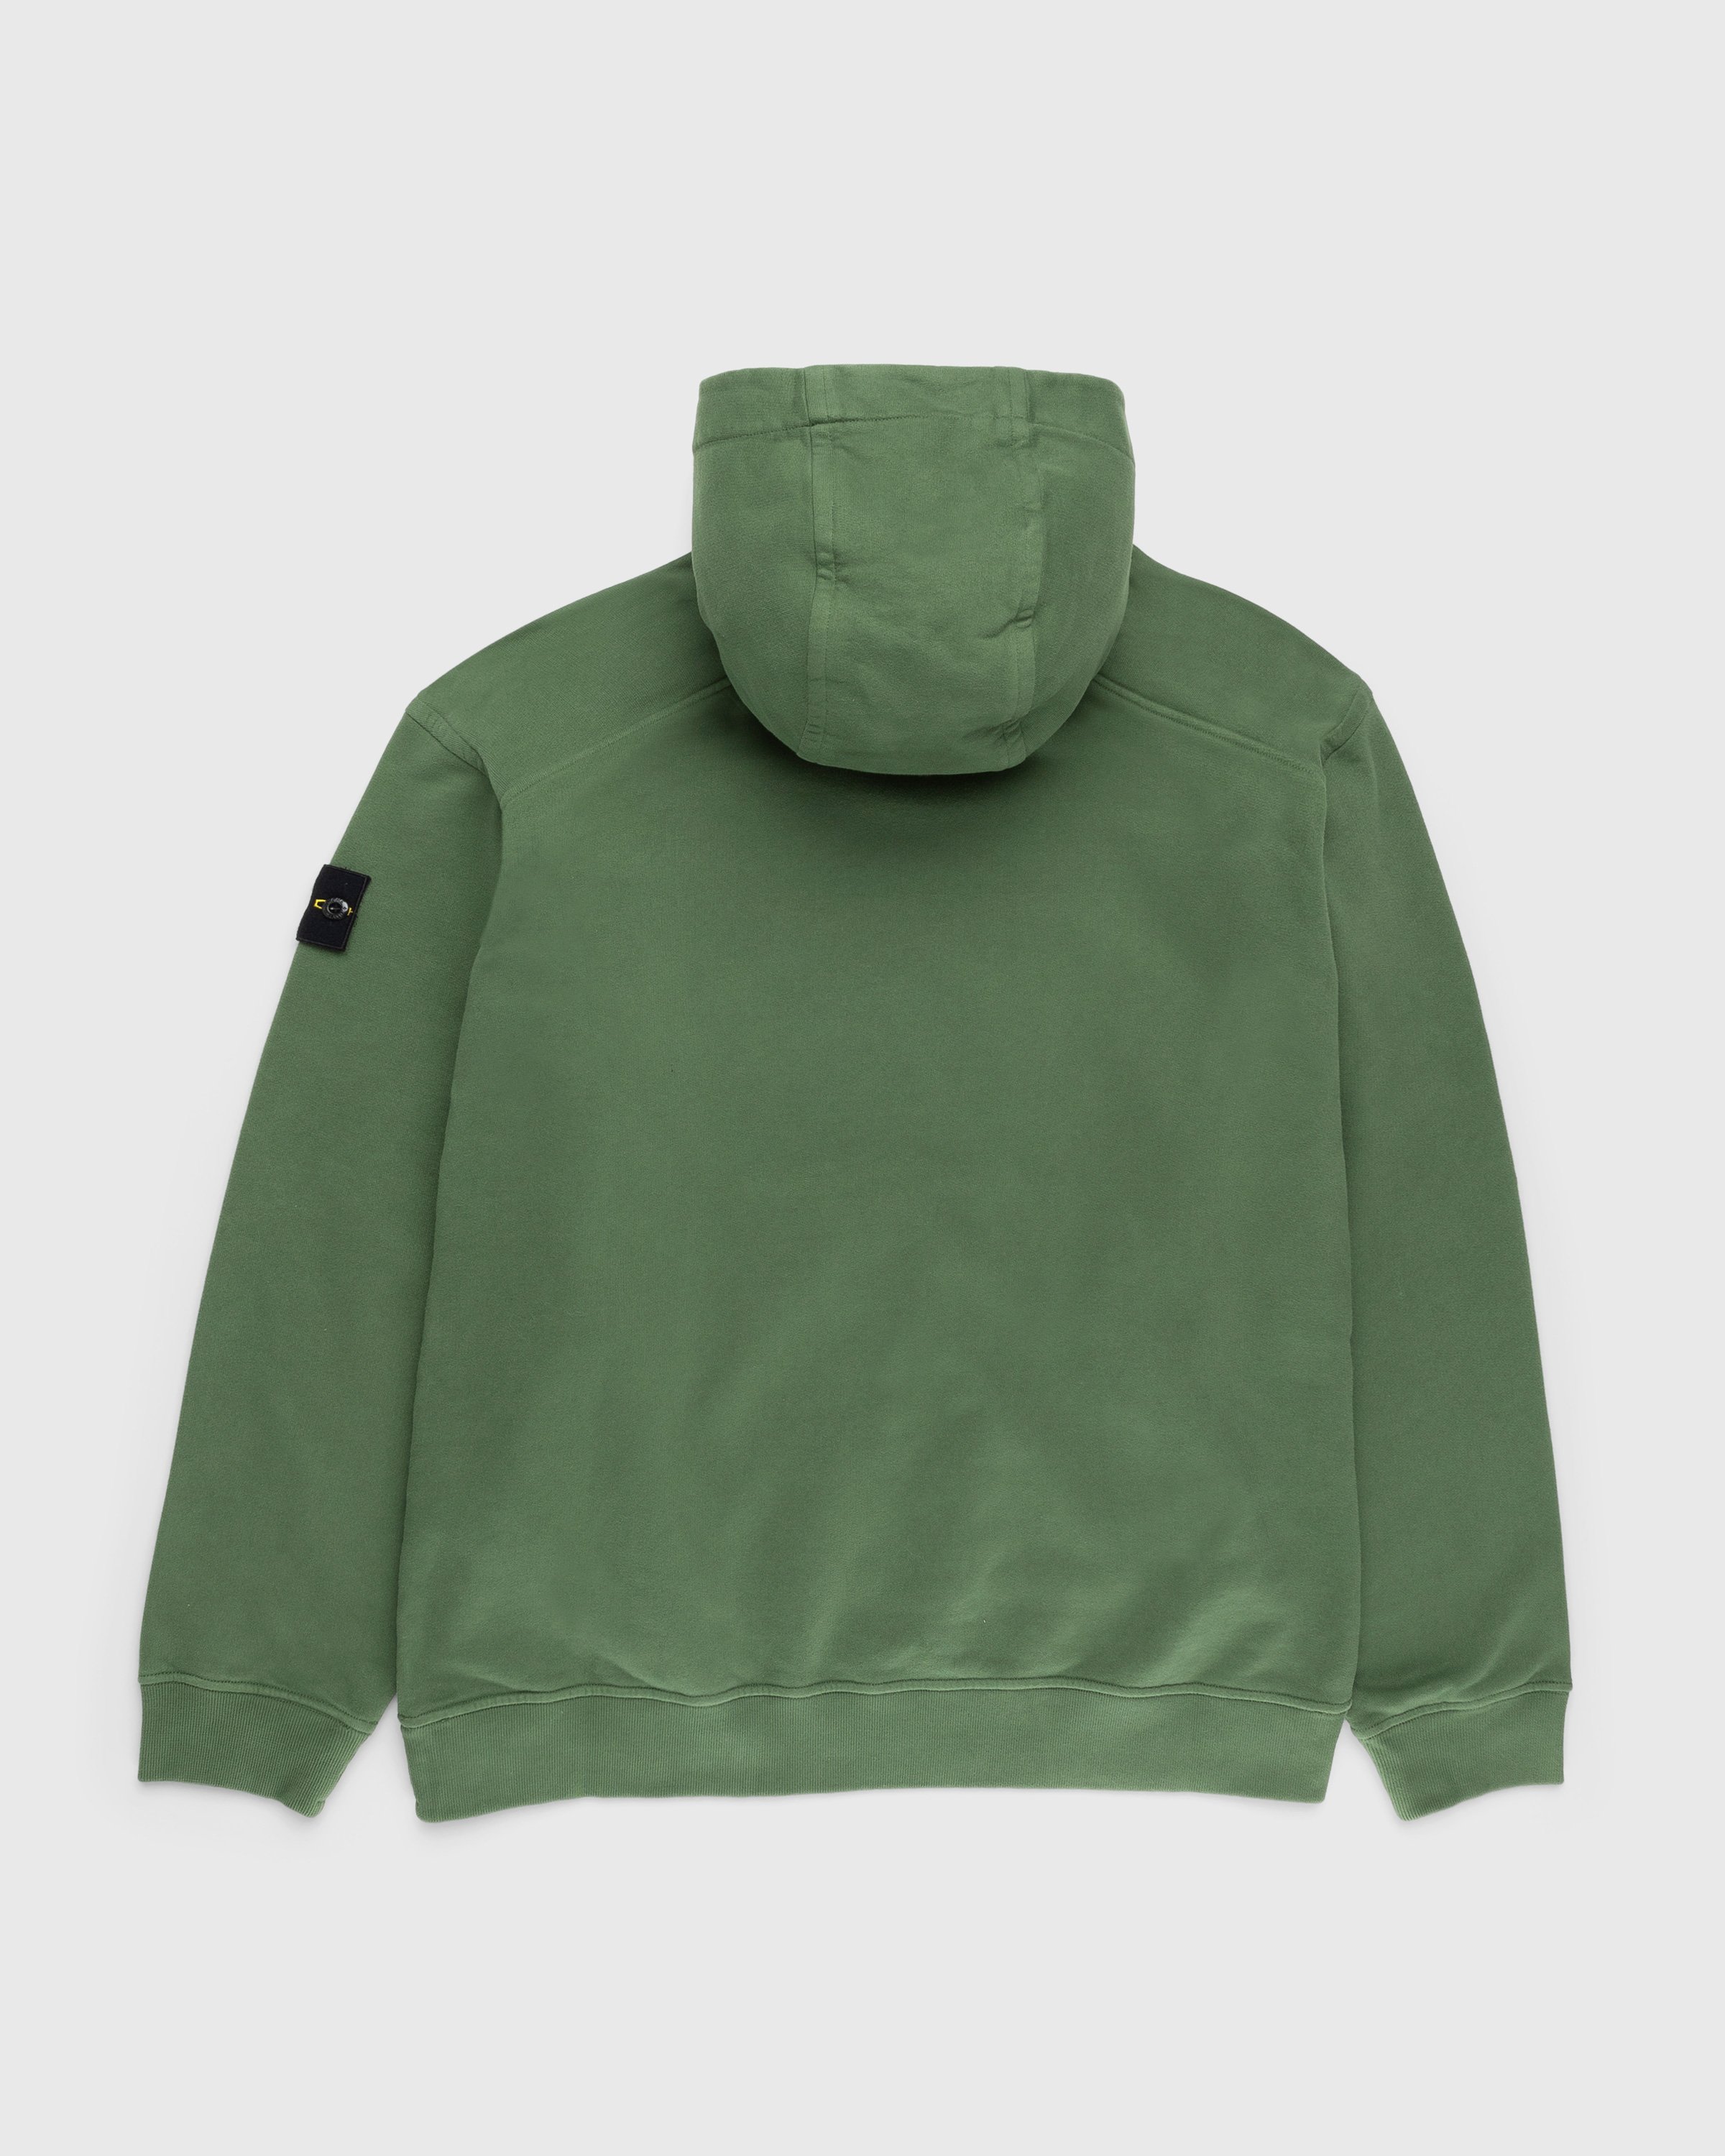 Stone Island - Garment-Dyed Fleece Hoodie Olive - Clothing - Green - Image 2